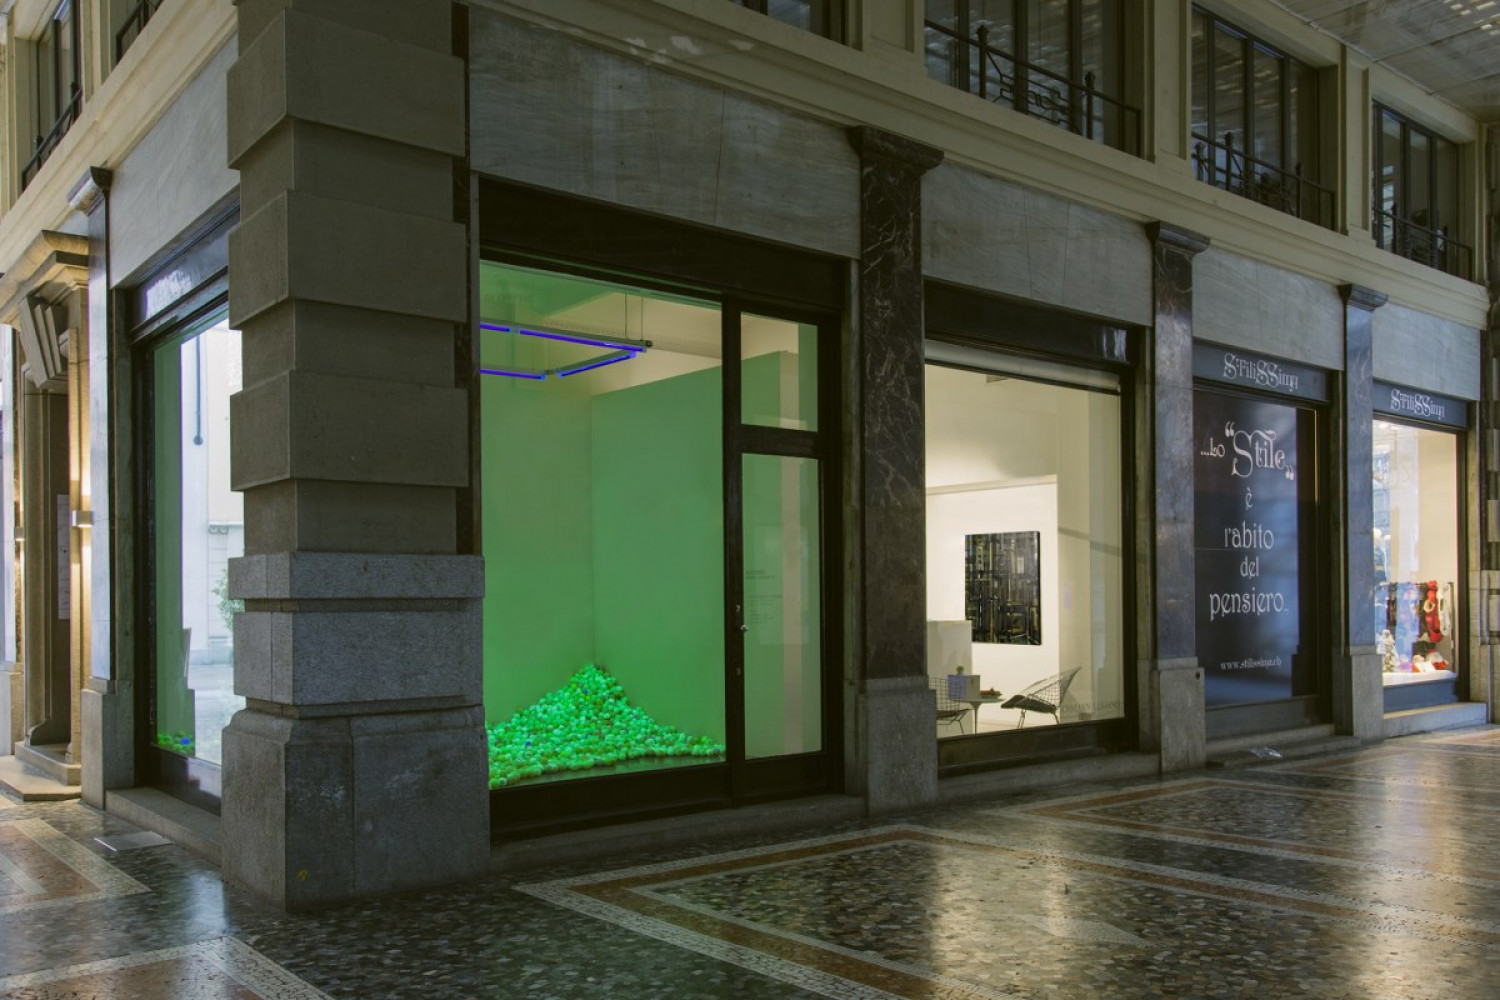 Alex Dorici, Installation view, Buchmann Lugano, 2015